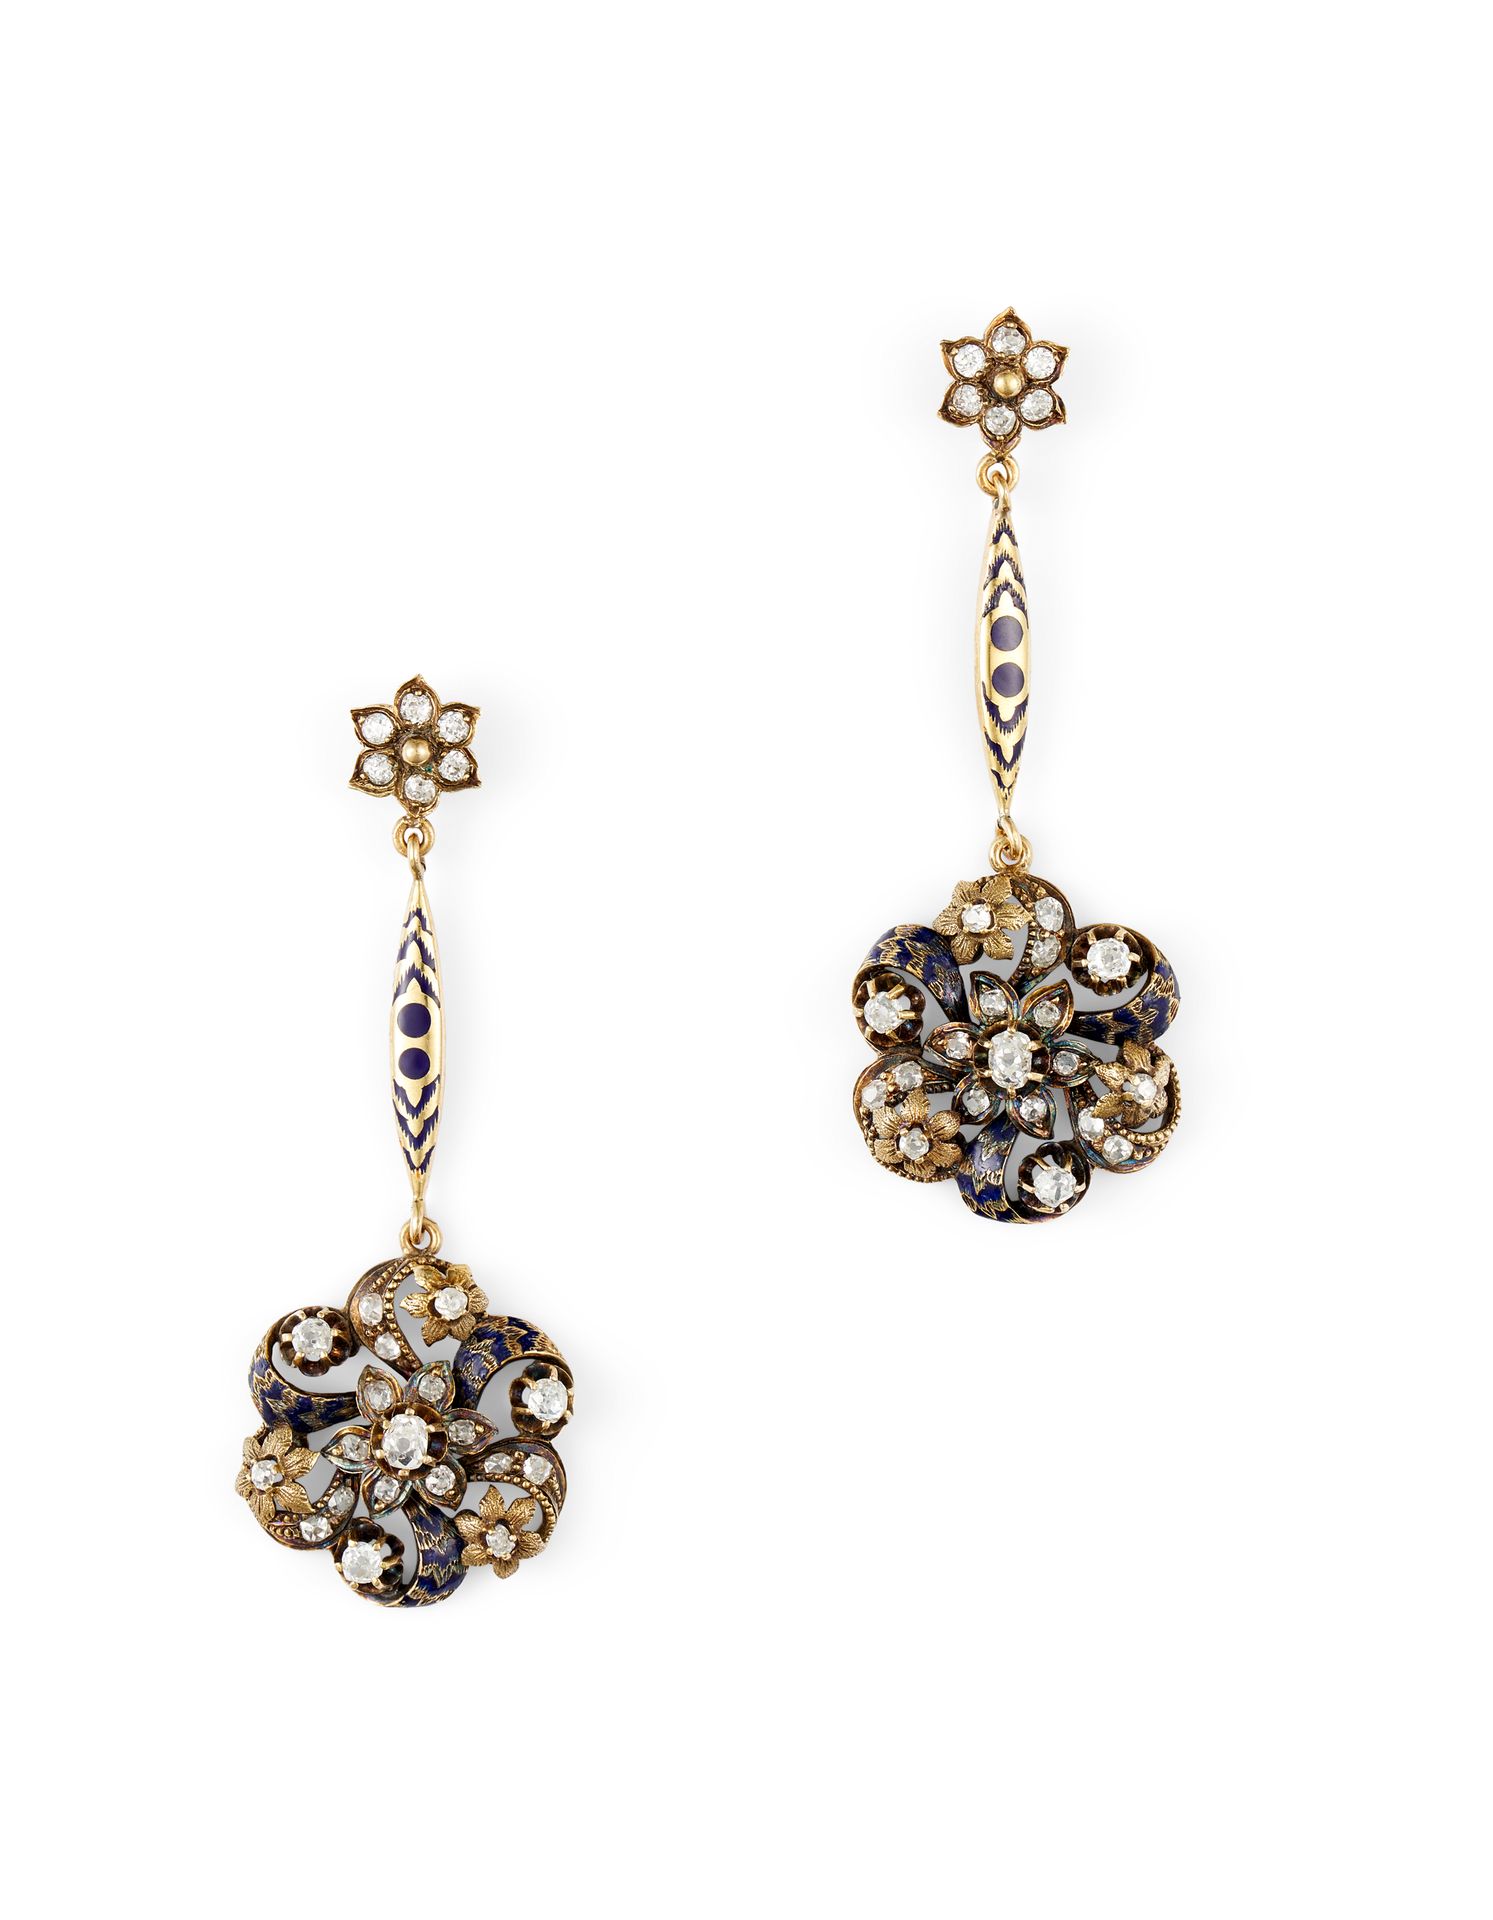 Null 珐琅耳环 18K黄金，镶嵌玫瑰式切割钻石和蓝色珐琅。

印记：无

尺寸：5厘米 - Tw:10,6 g